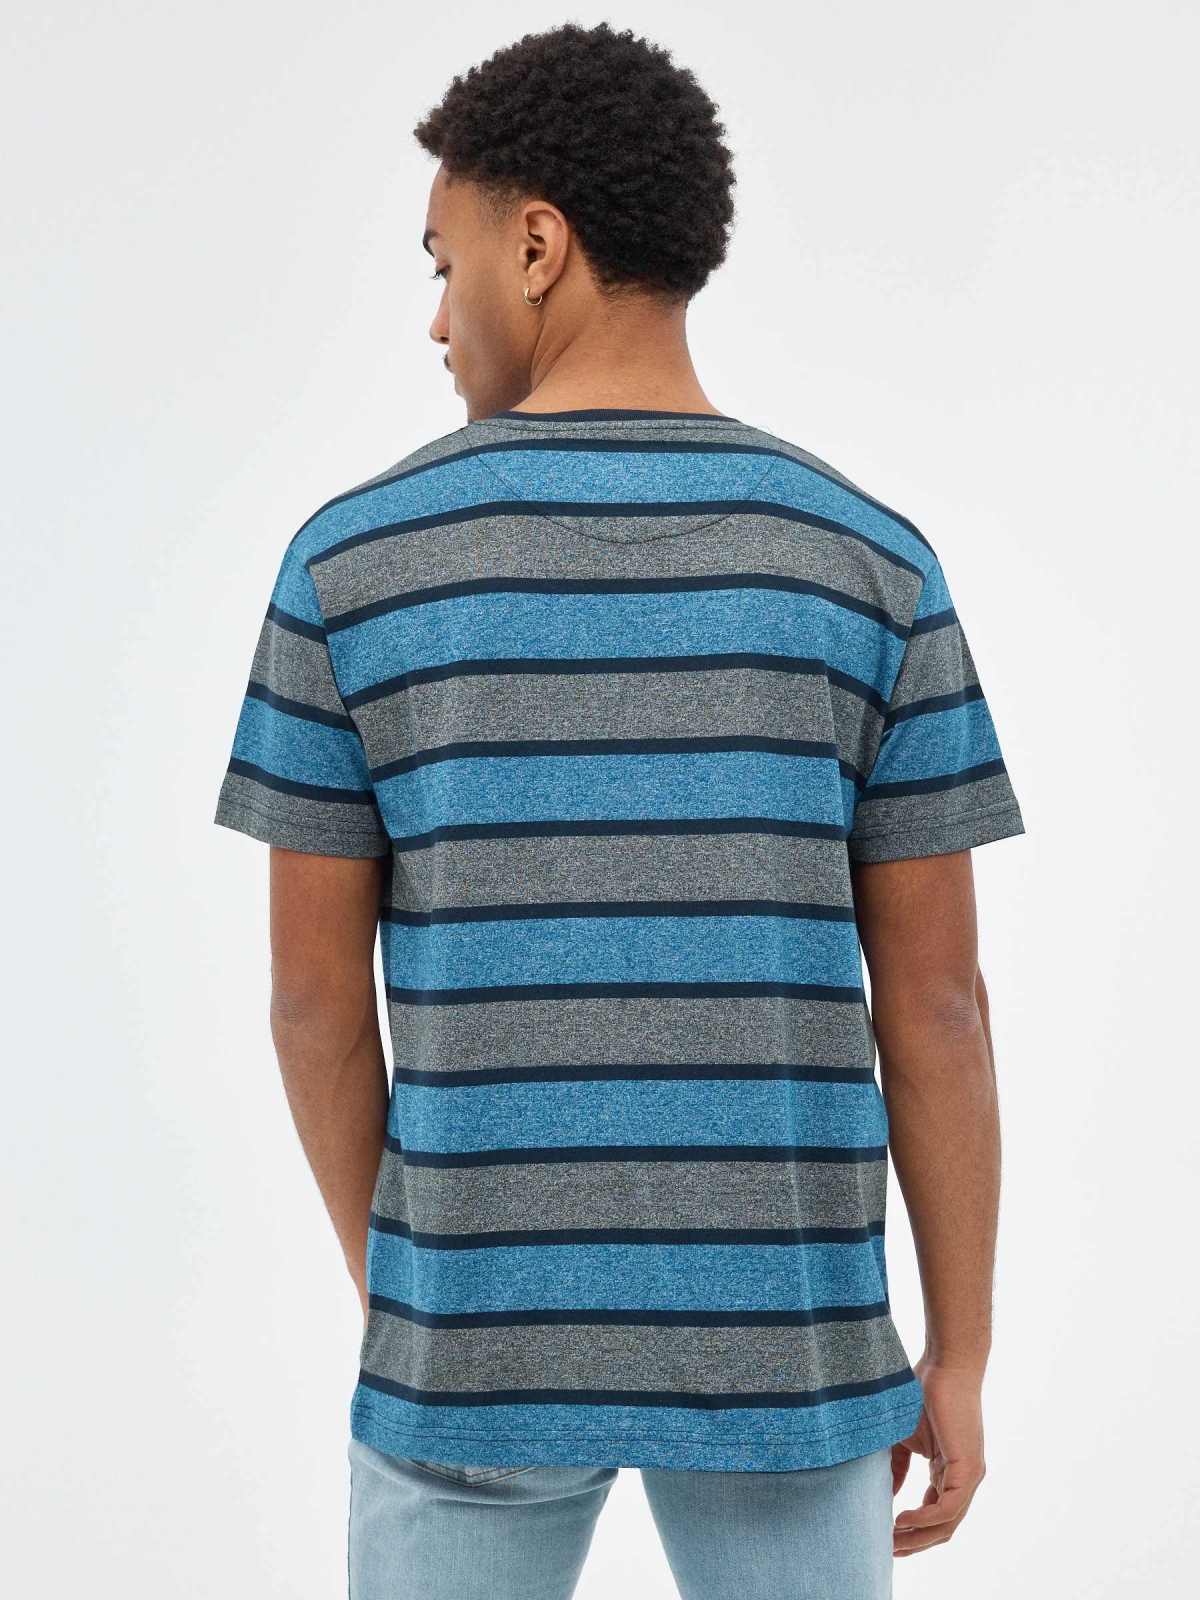 Camiseta de rayas con bolsillo azul marino vista media trasera